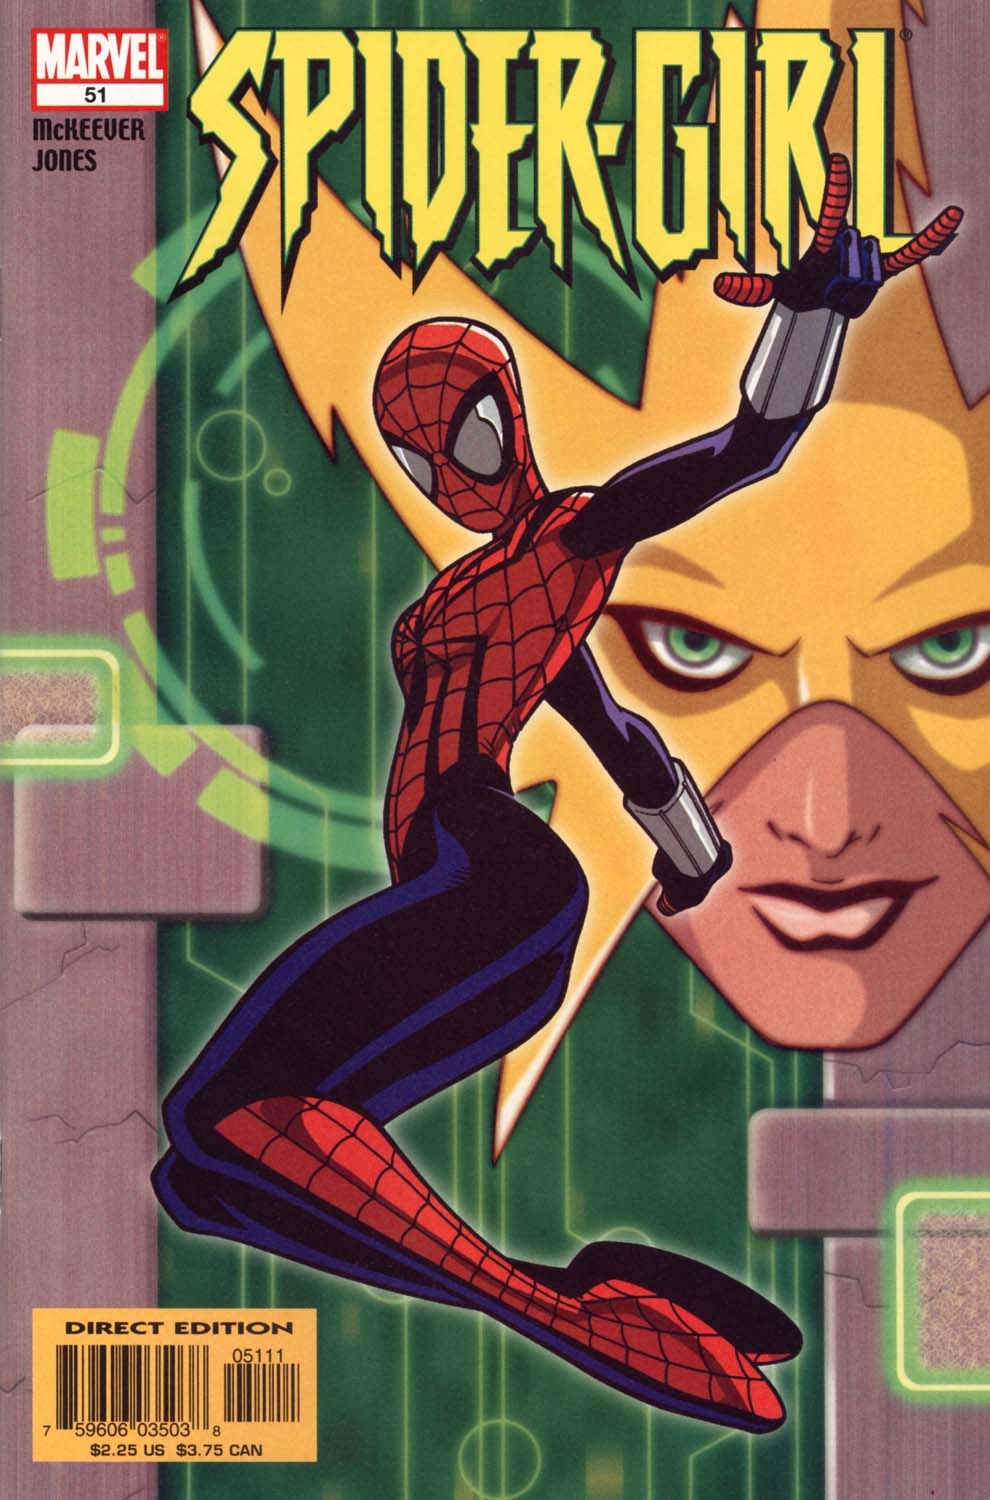 Spider-Girl Vol. 1 #51